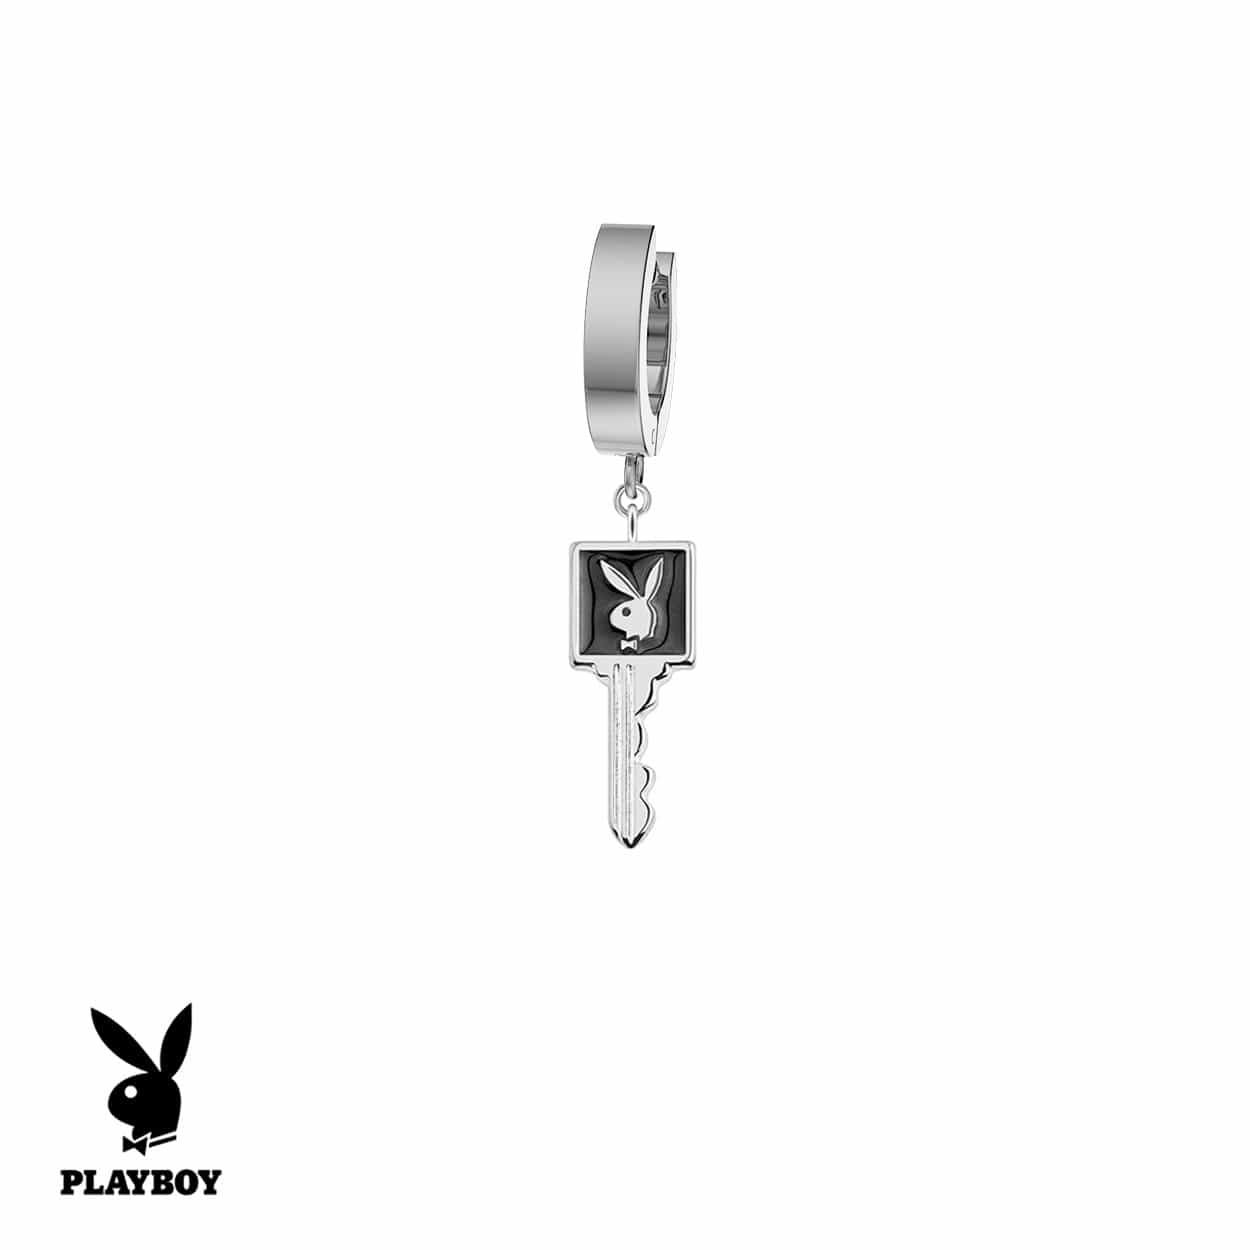 Playboy™ Key Earring Mister SFC